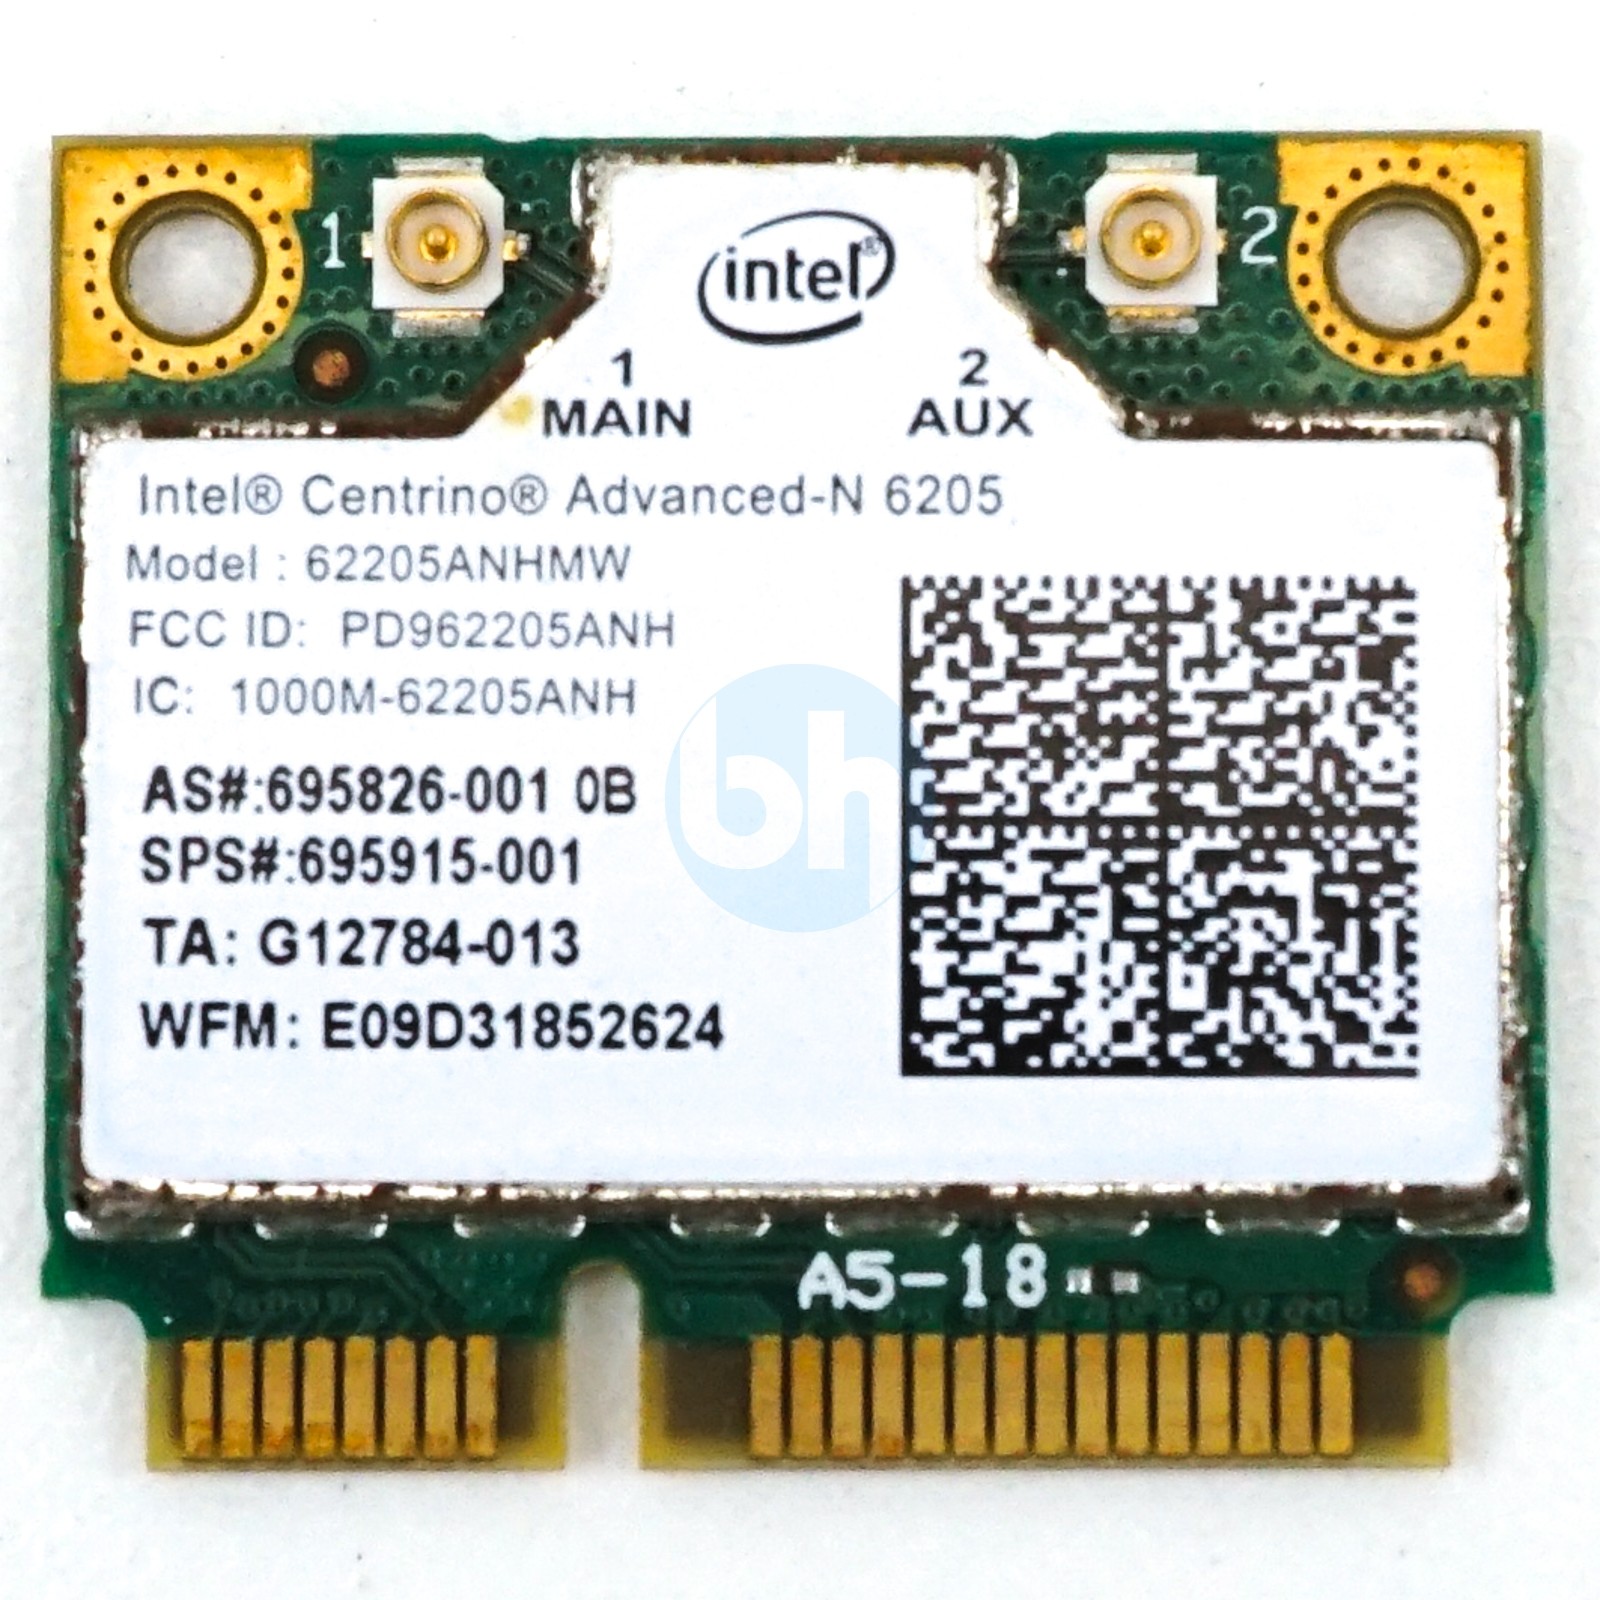 rulletrappe kompliceret billig HP (631954-001) Intel Centrino-N 6205 Mini PCIe 2.5/5.0GHz WiFi Card  (695826-001)